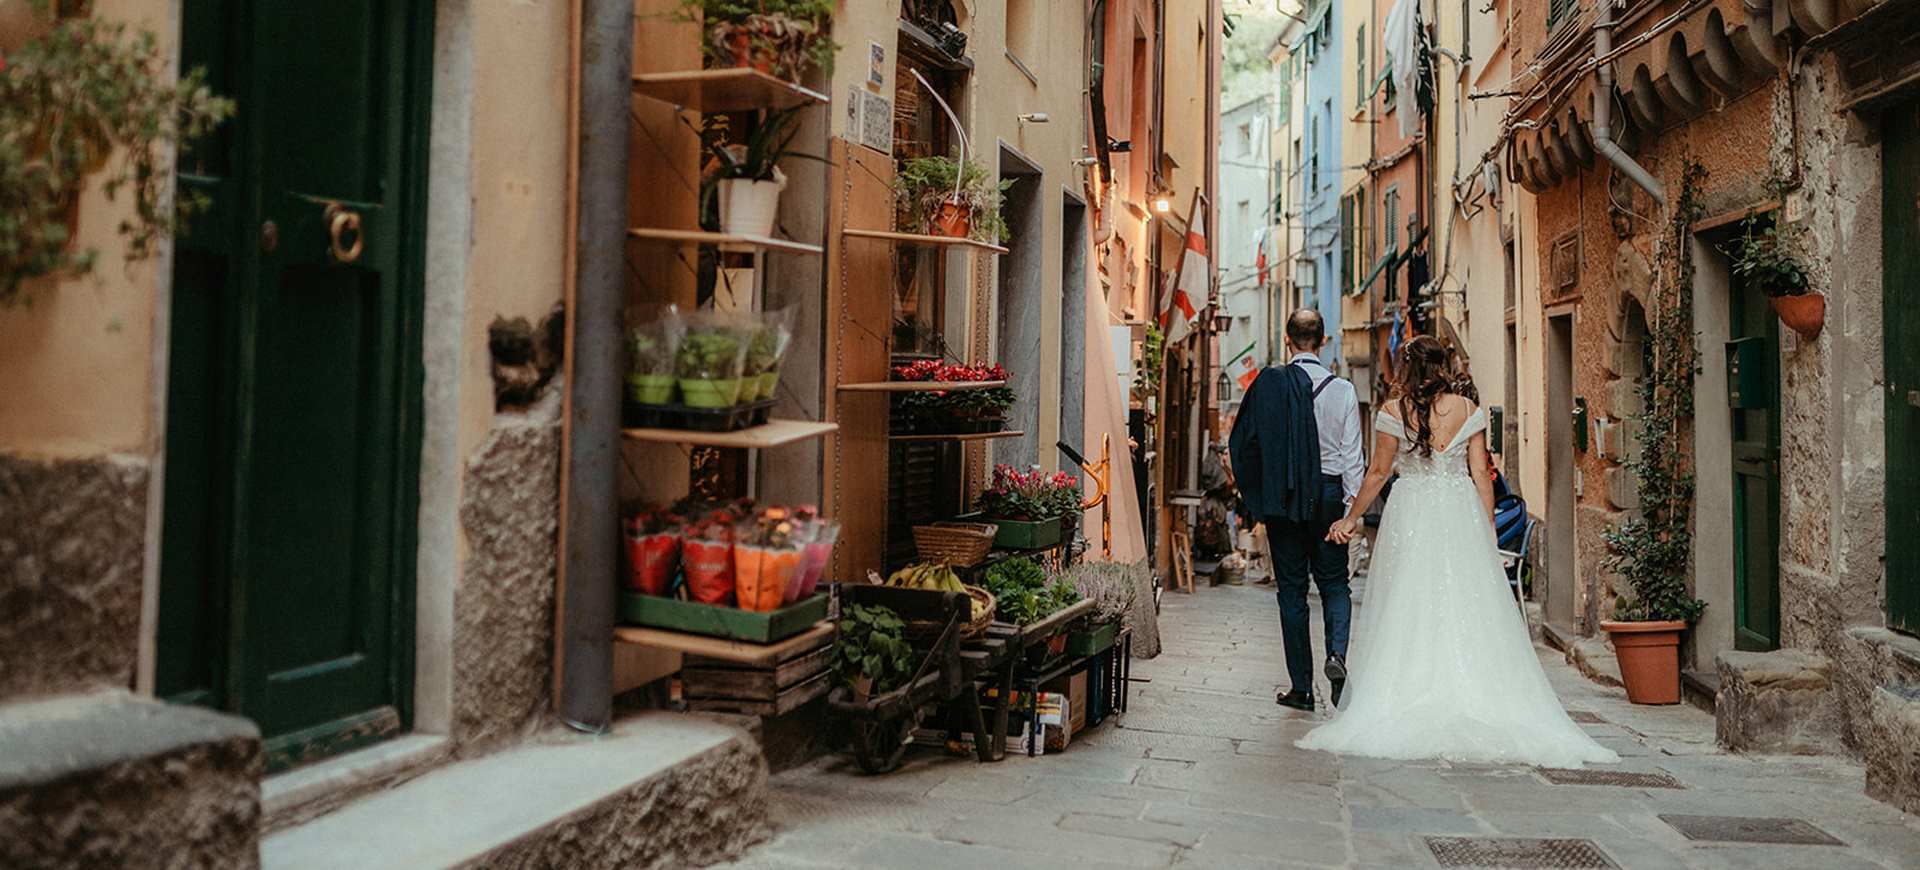 Street Photoshoot in Cinque Terre Italy